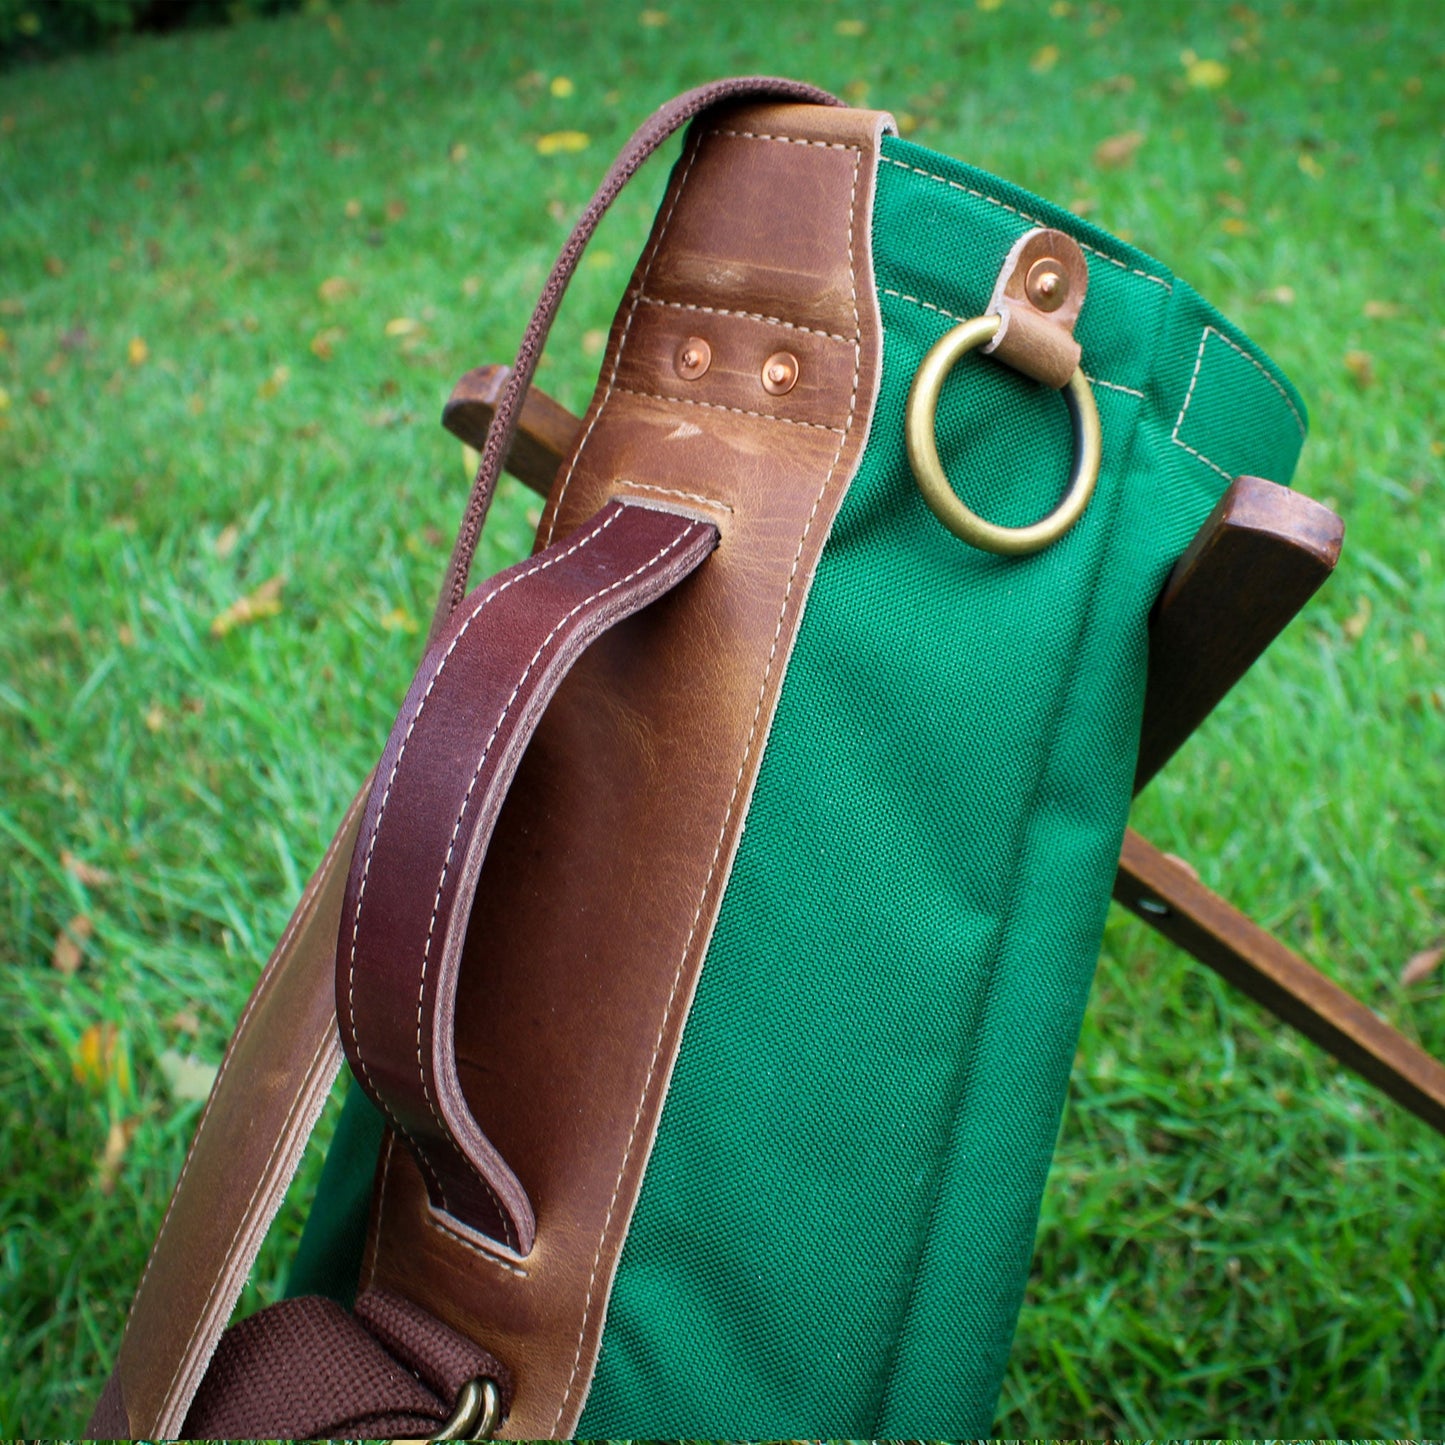 Steurer & Co, Sunday Golf Bag, Made in USA, Enjoy the Walk, In the Wild, Custom Golf Bag